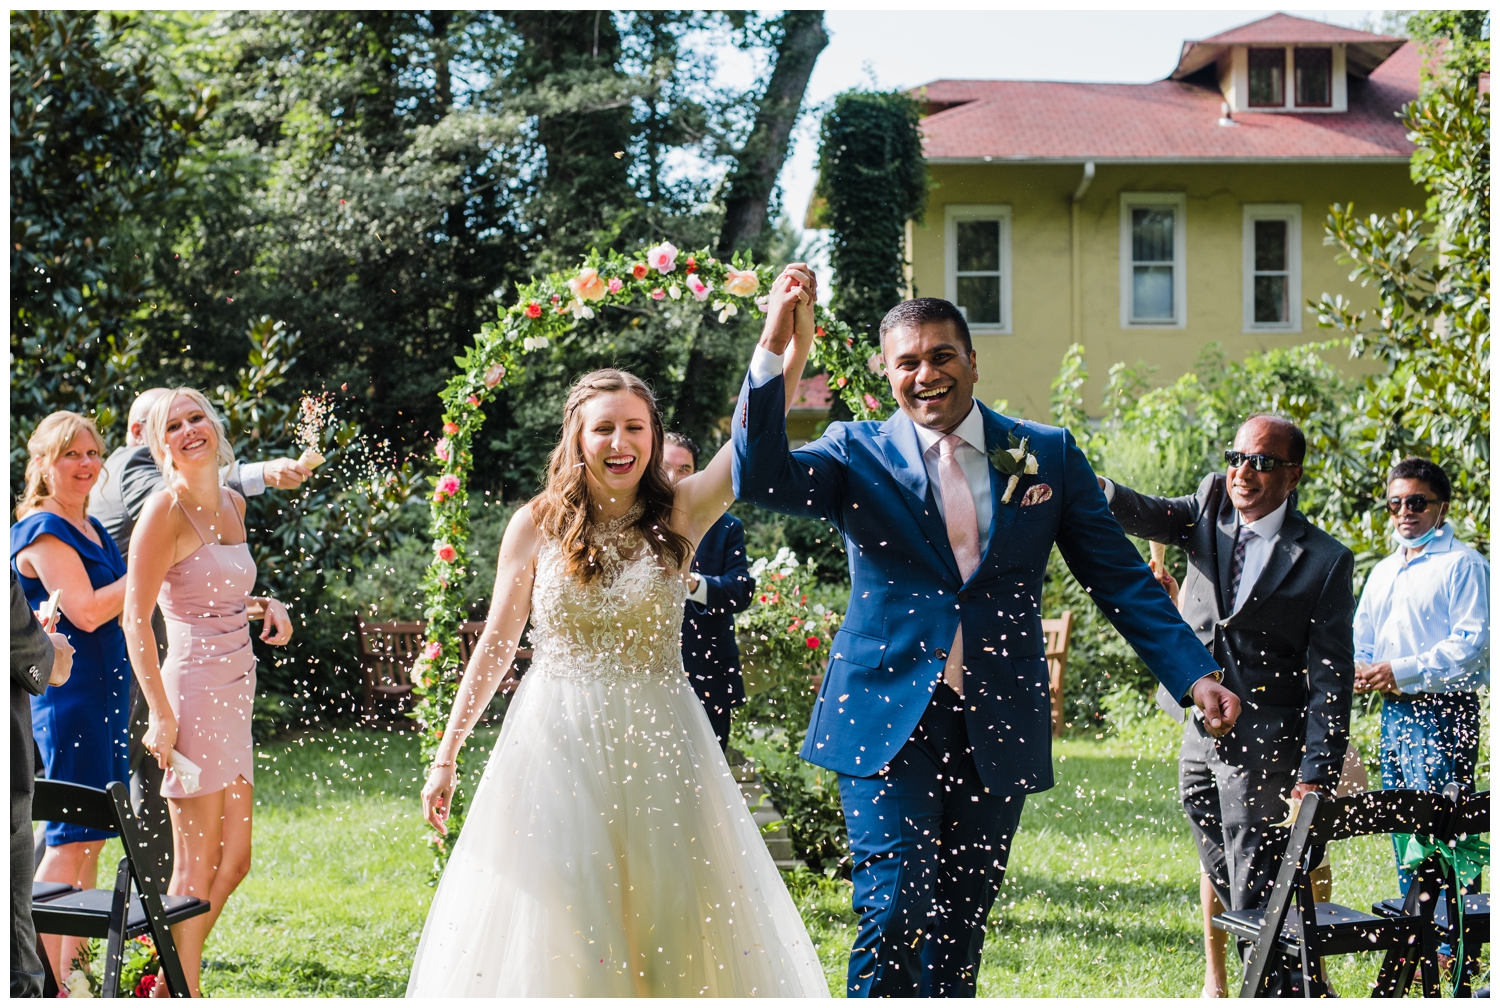 ideas for a backyard wedding include a floral arch